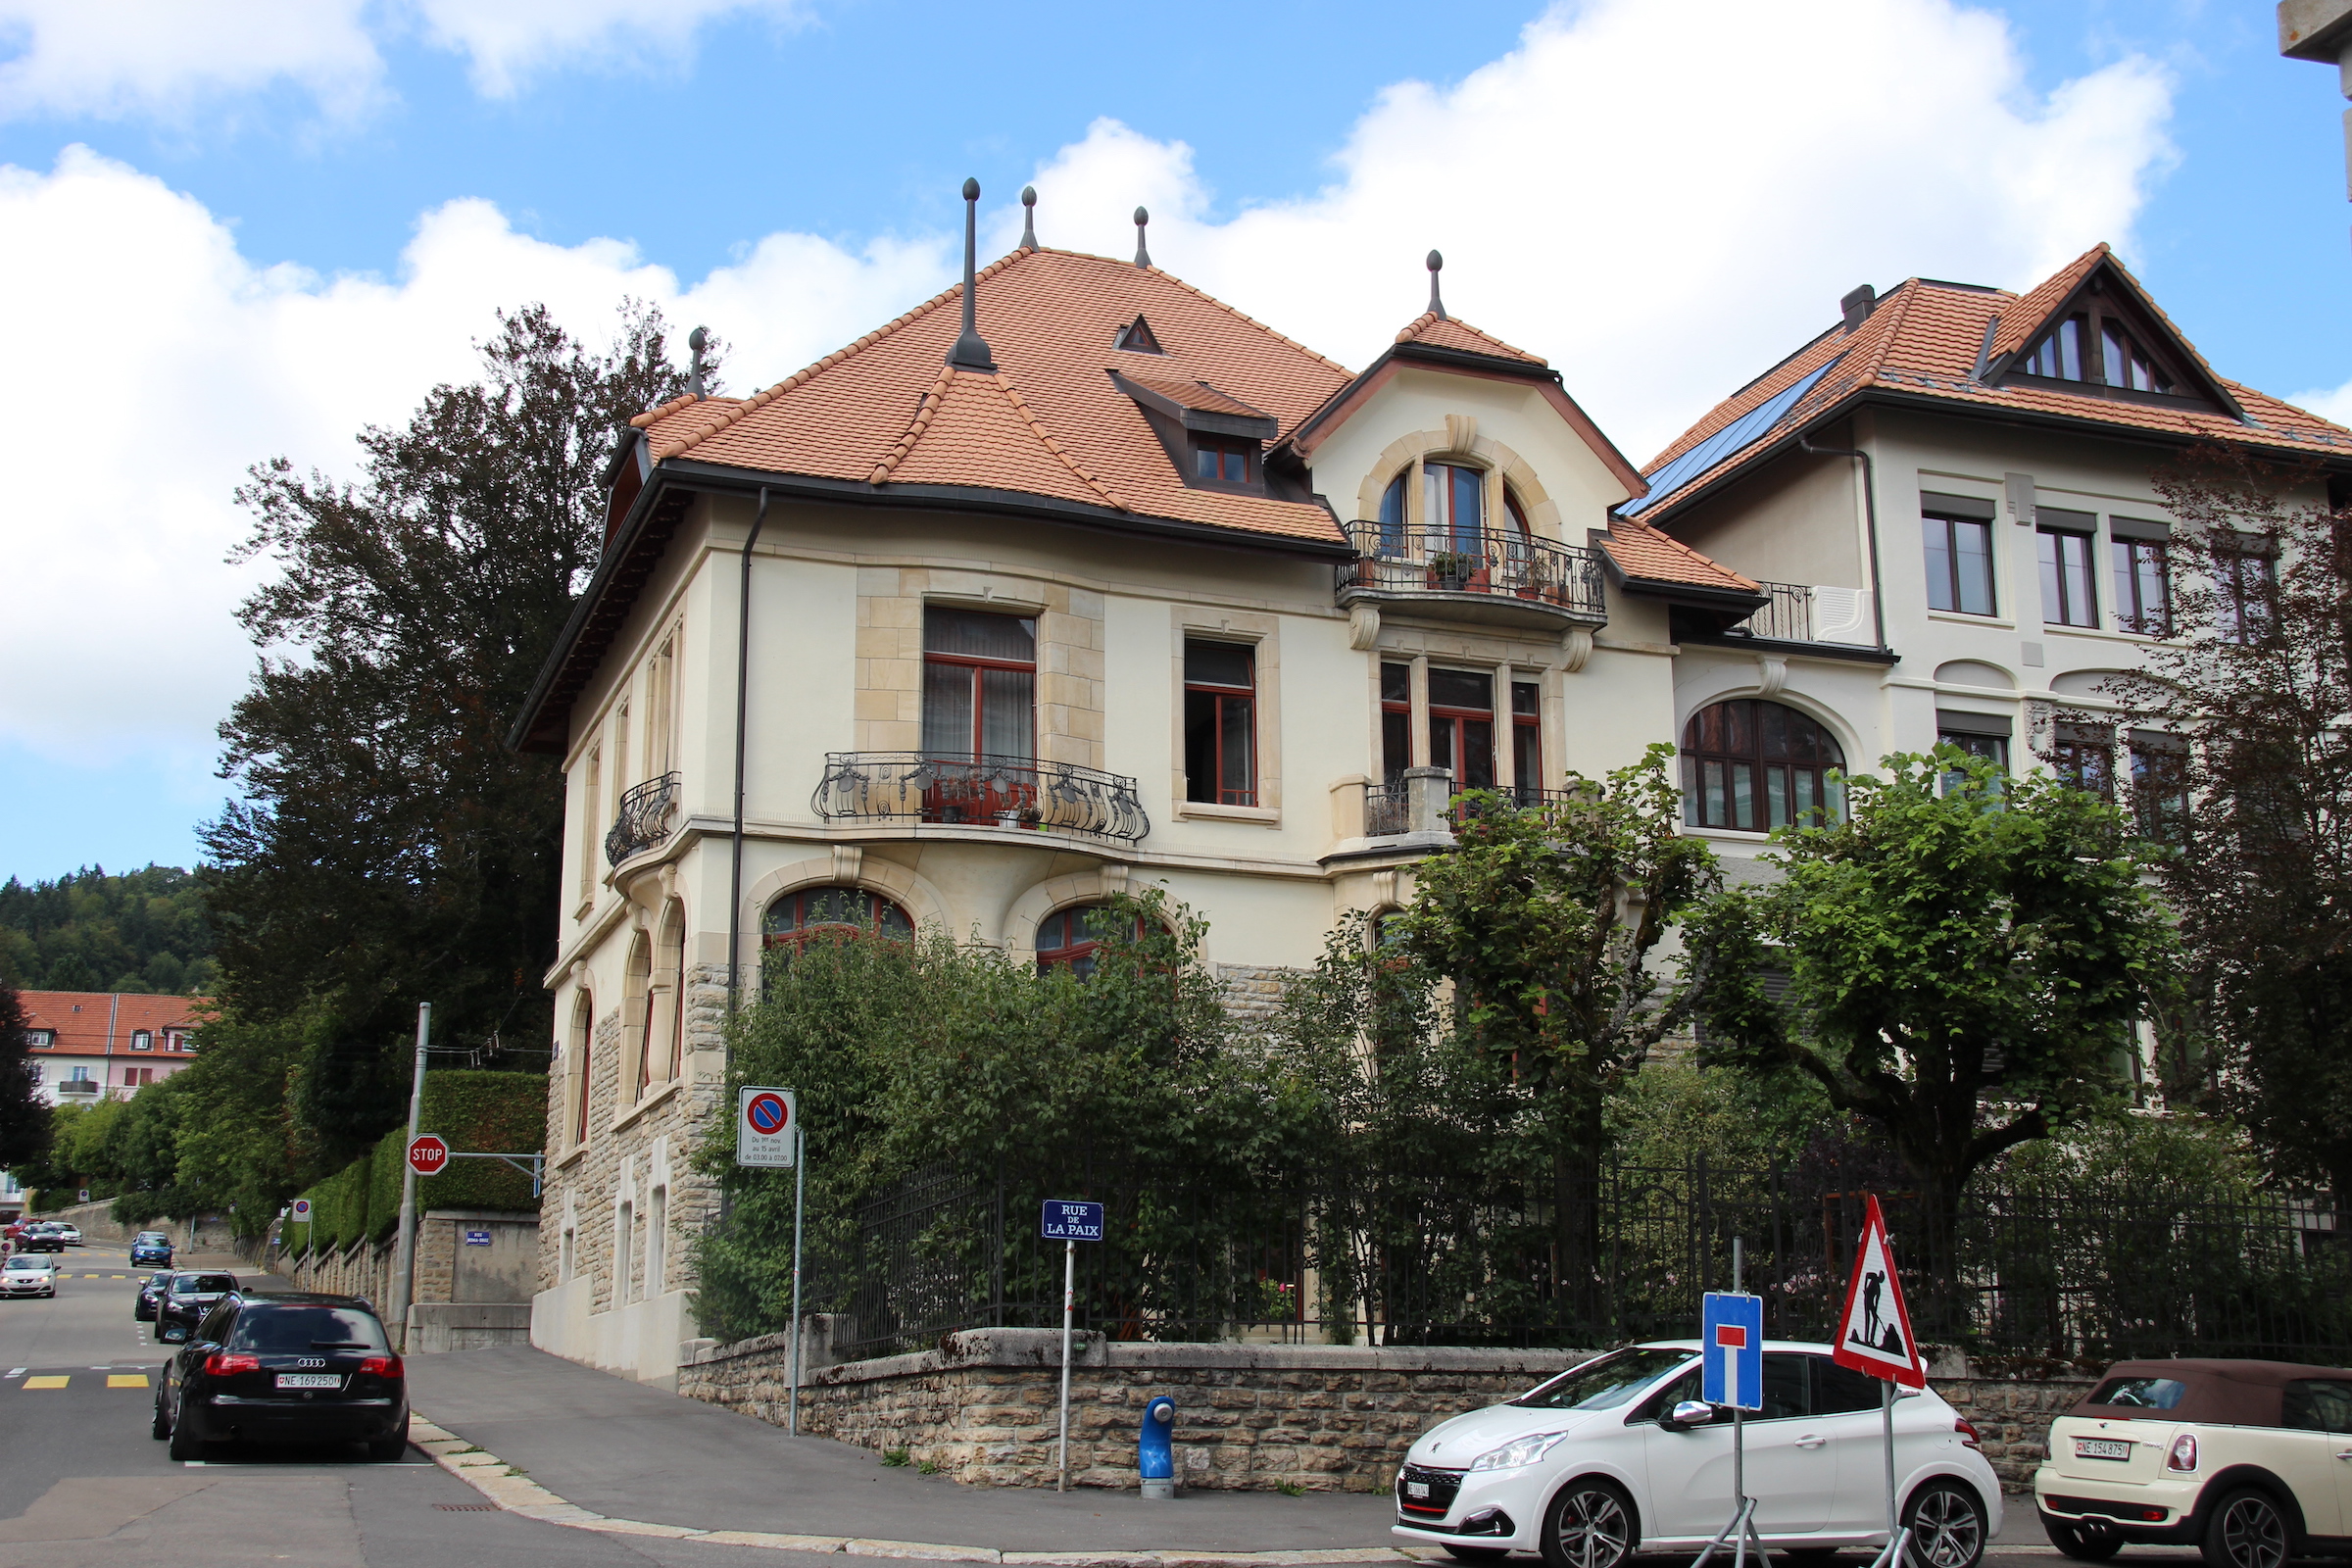 Art nouveau (Jugendstil) villa in La Chaux-de-Fondsworkshop of ochs und junior